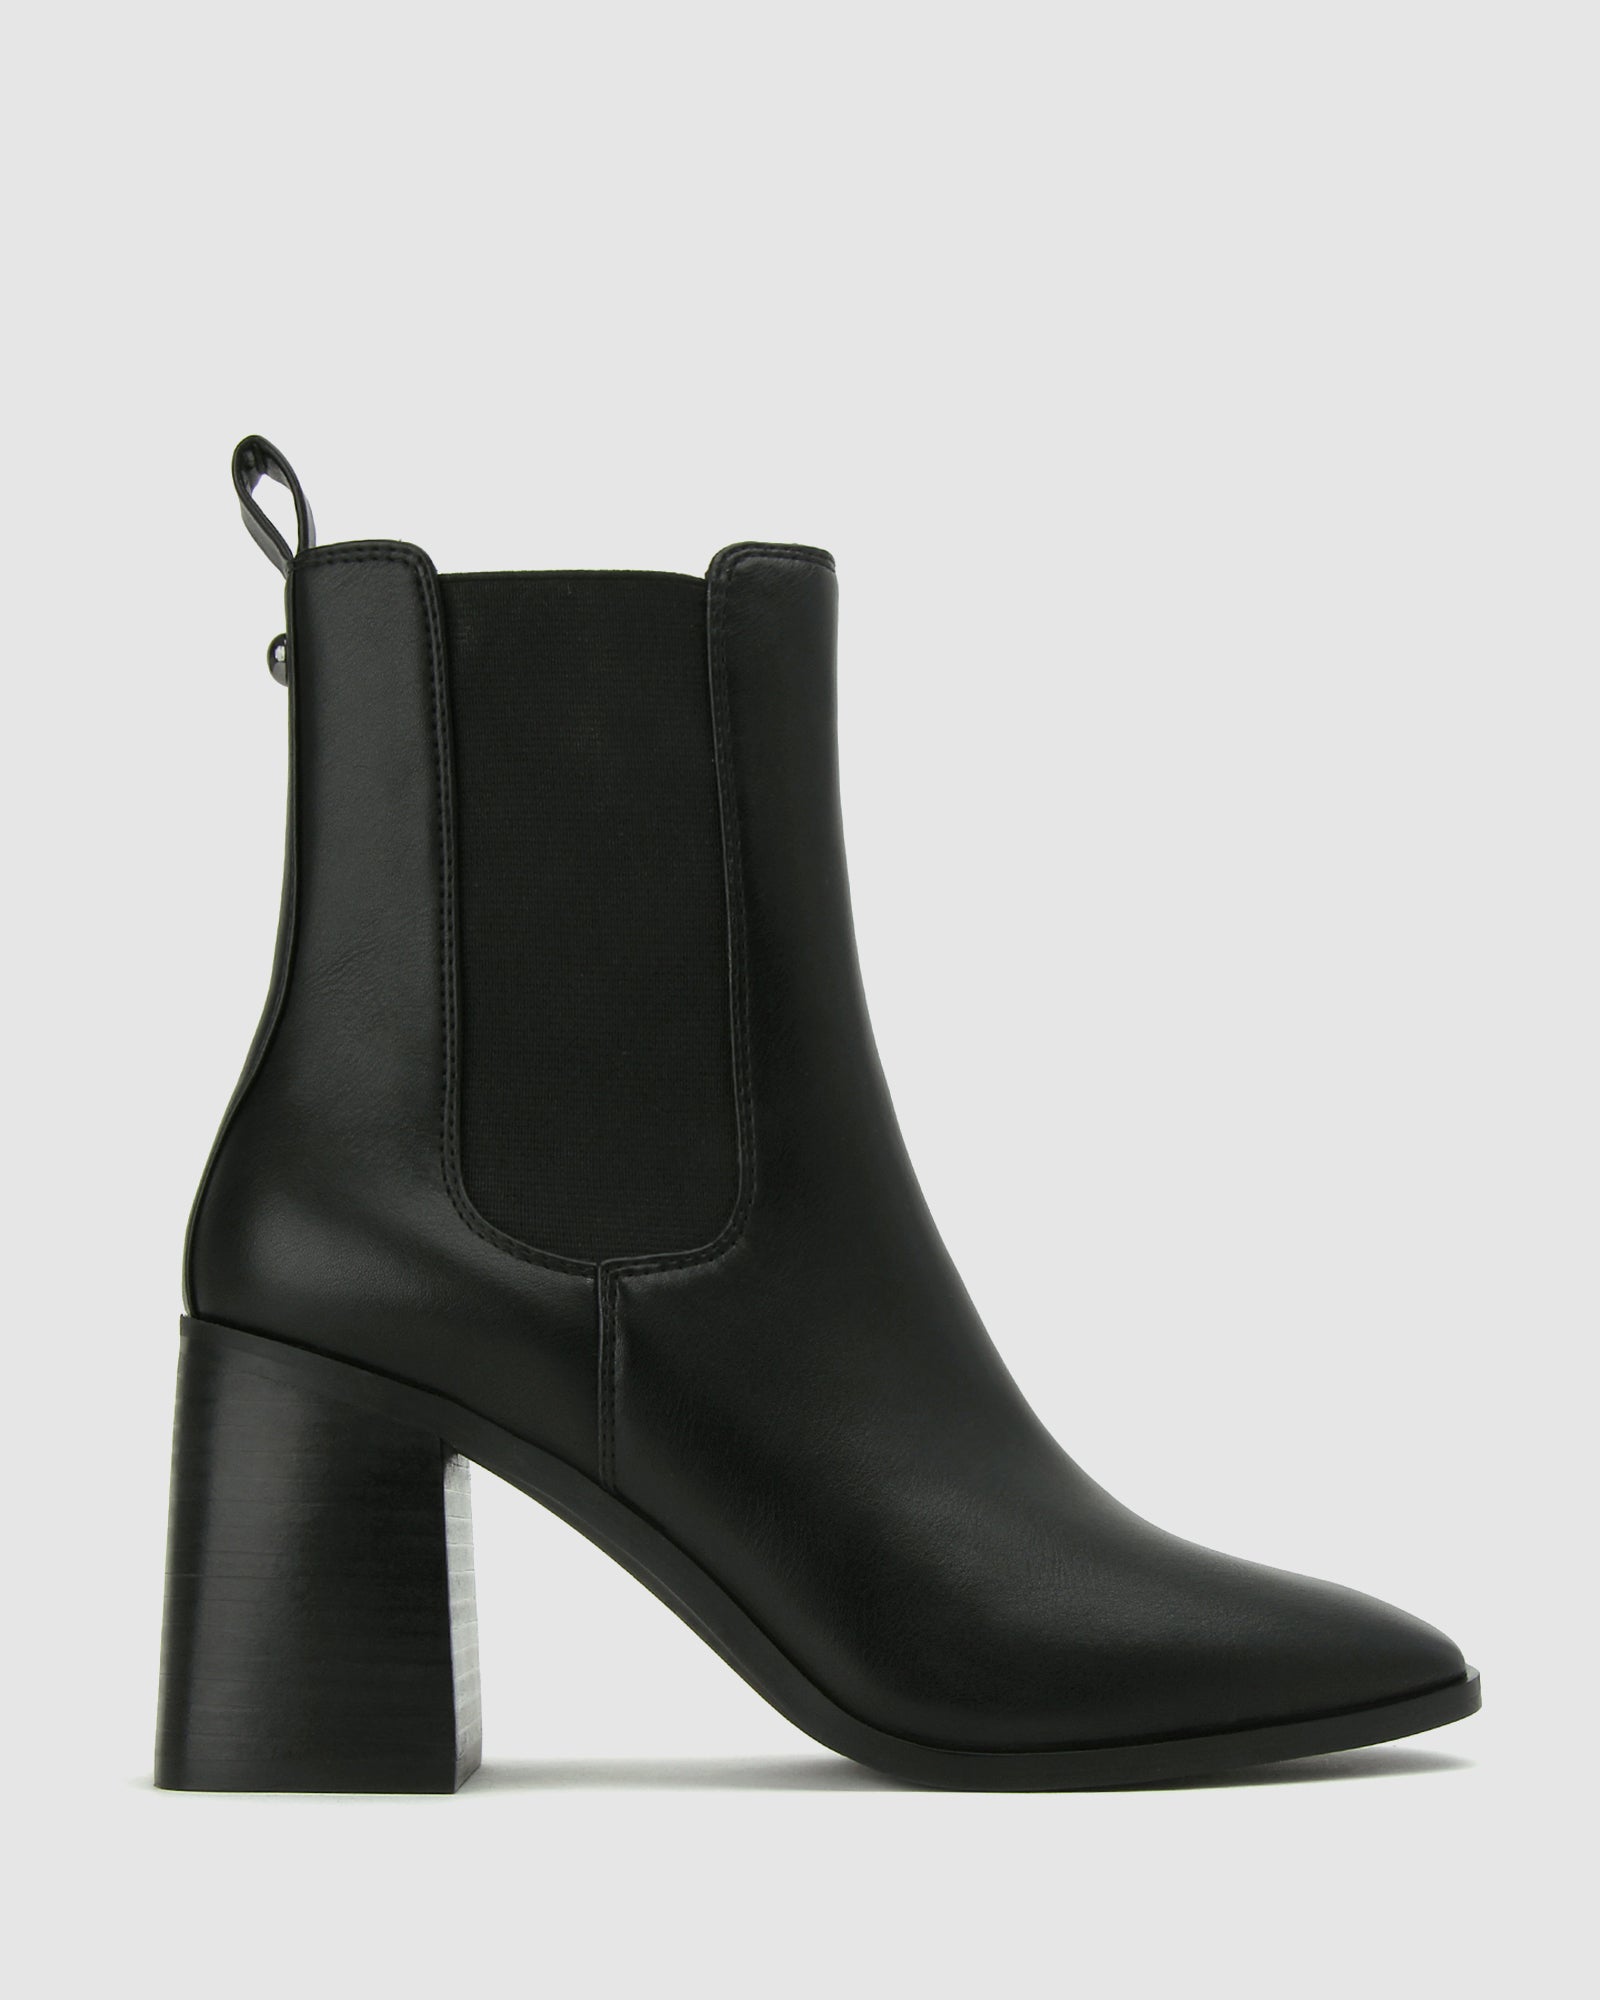 Buy LENI Block Heel Ankle Boots by Betts online - Betts